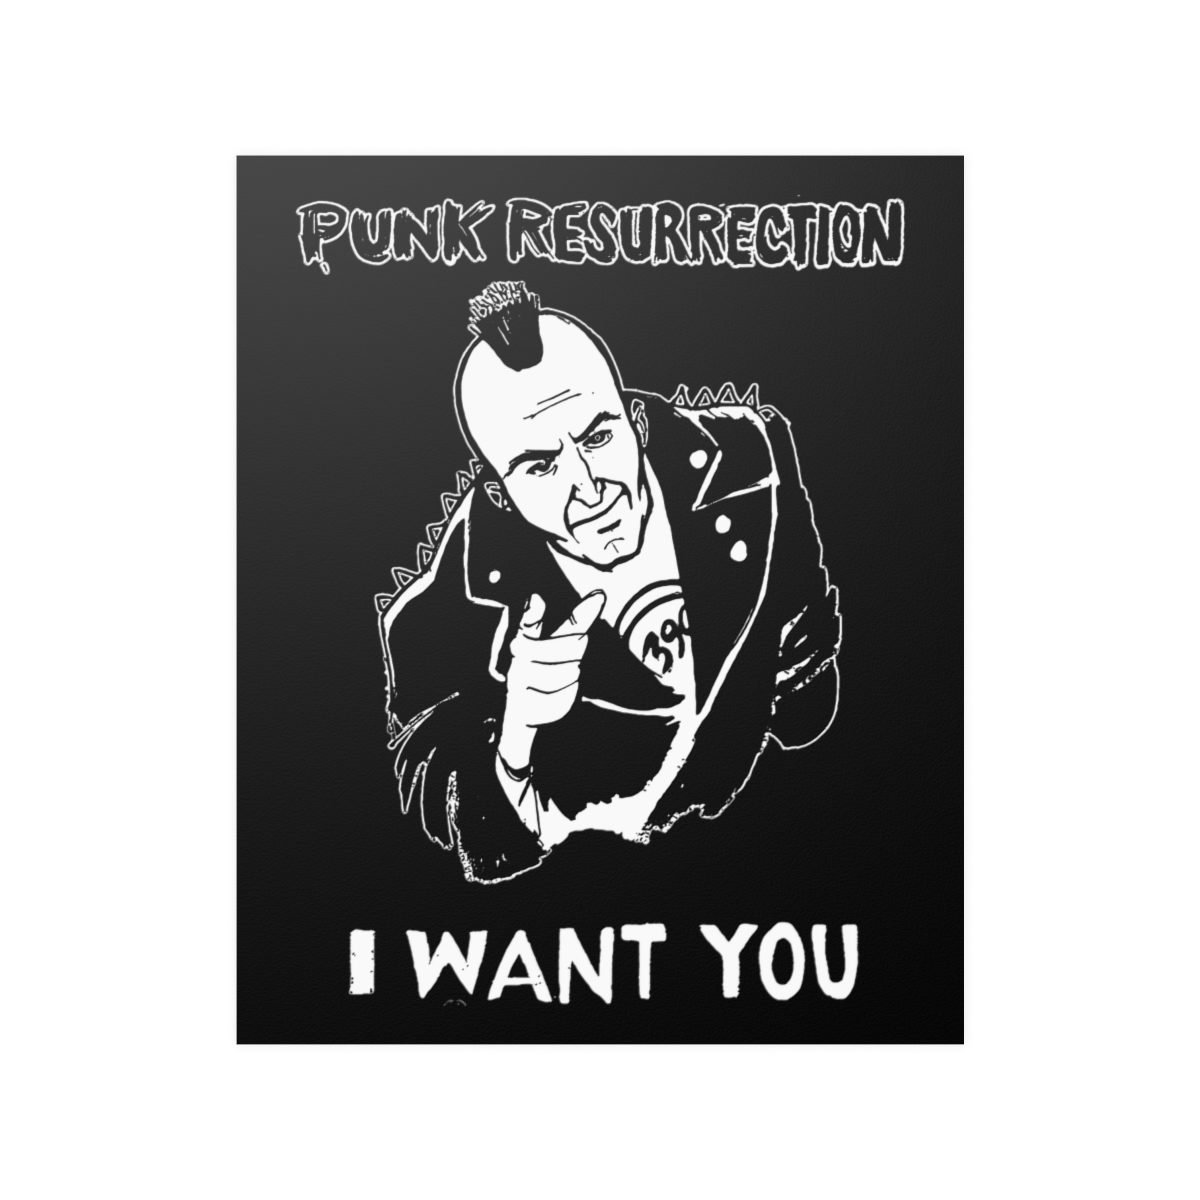 390 – Punk Resurrection Posters